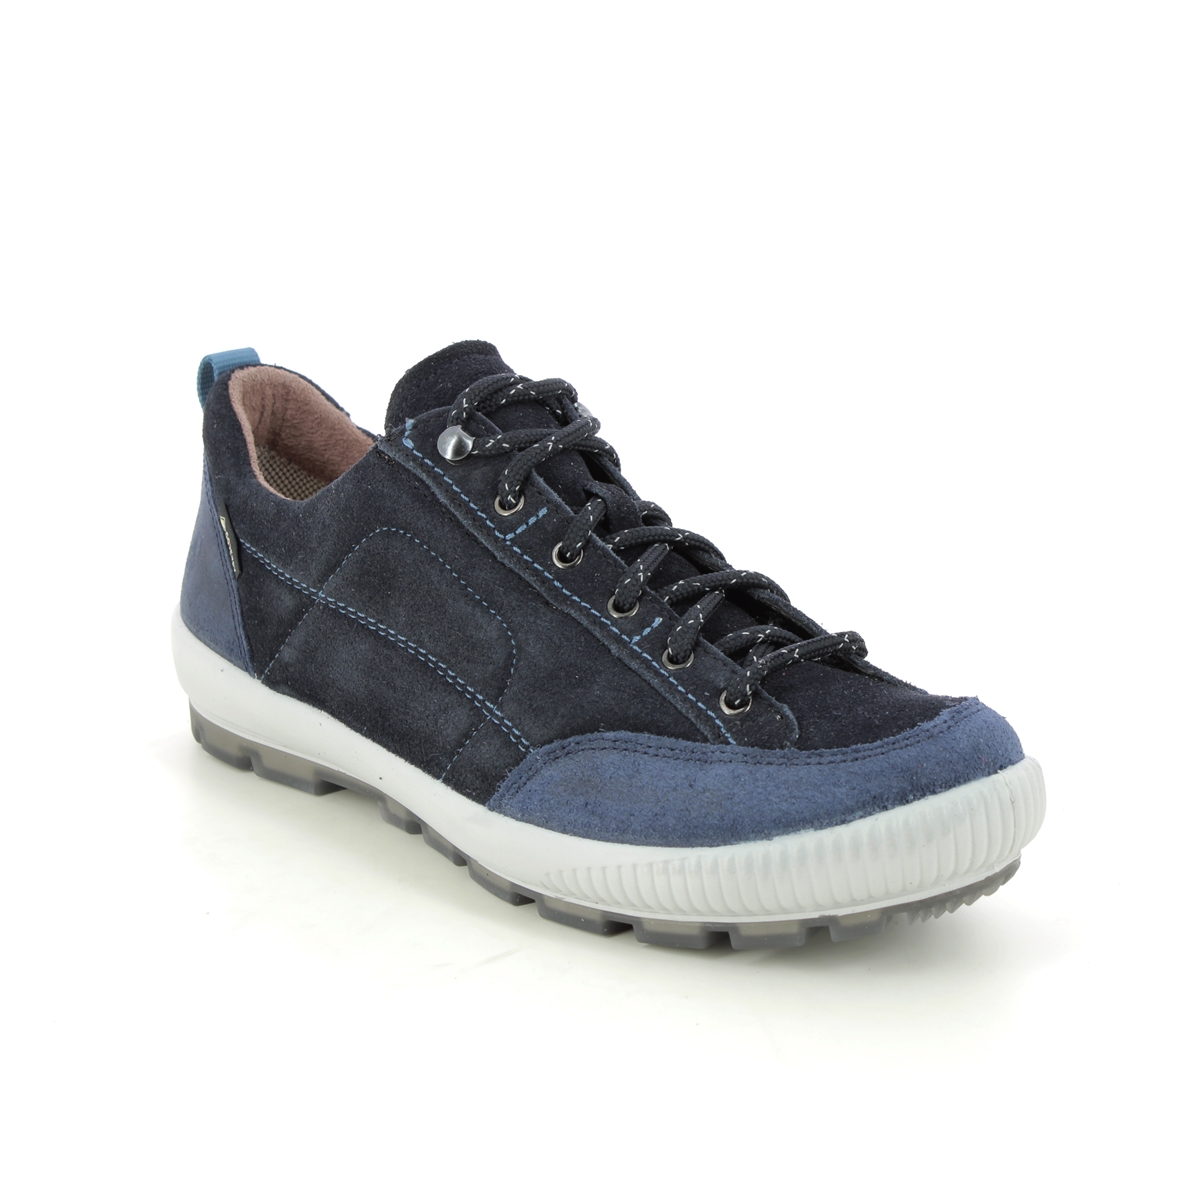 Legero Tanaro Trek Gtx Navy Womens Walking Shoes 2000210-8000 In Size 5 In Plain Navy